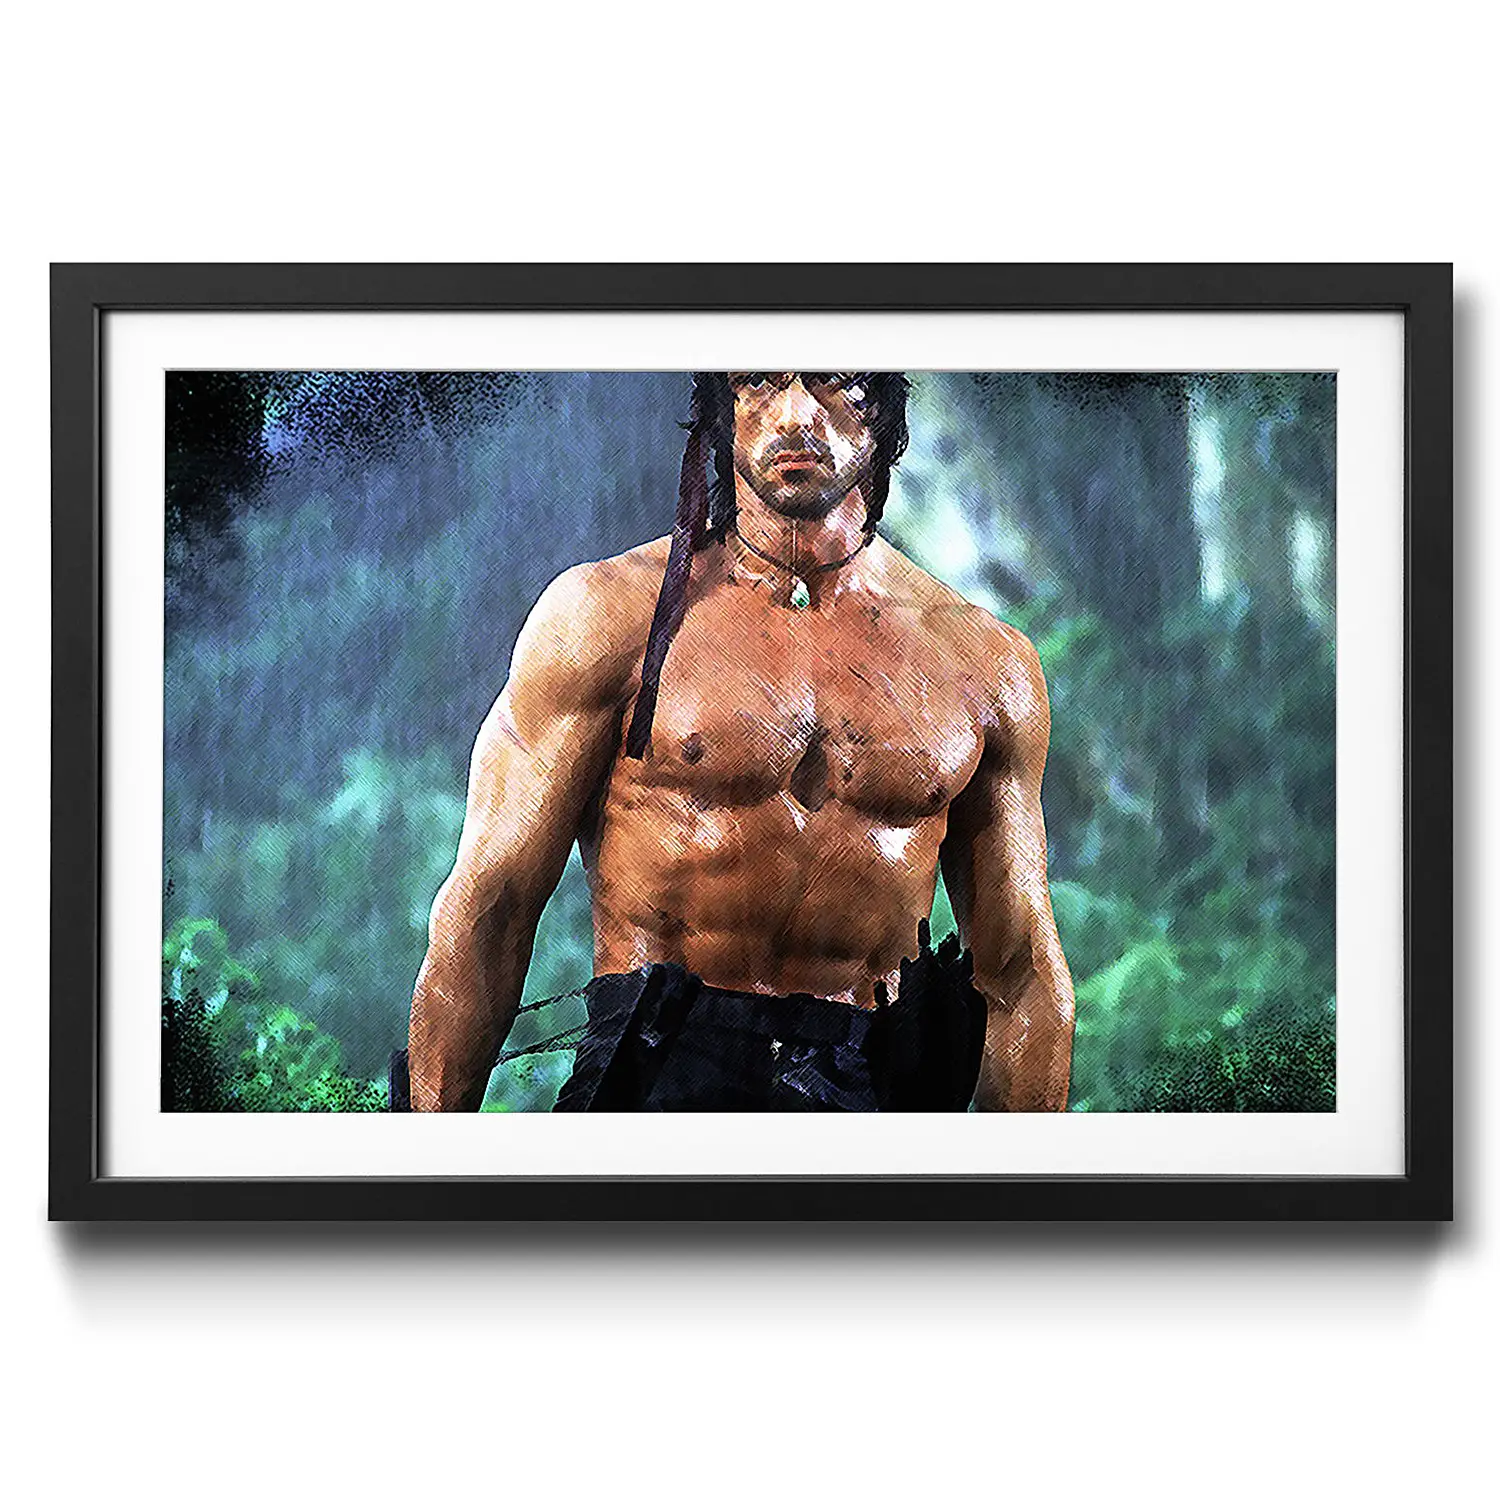 Gerahmtes Bild Rambo | Bilder